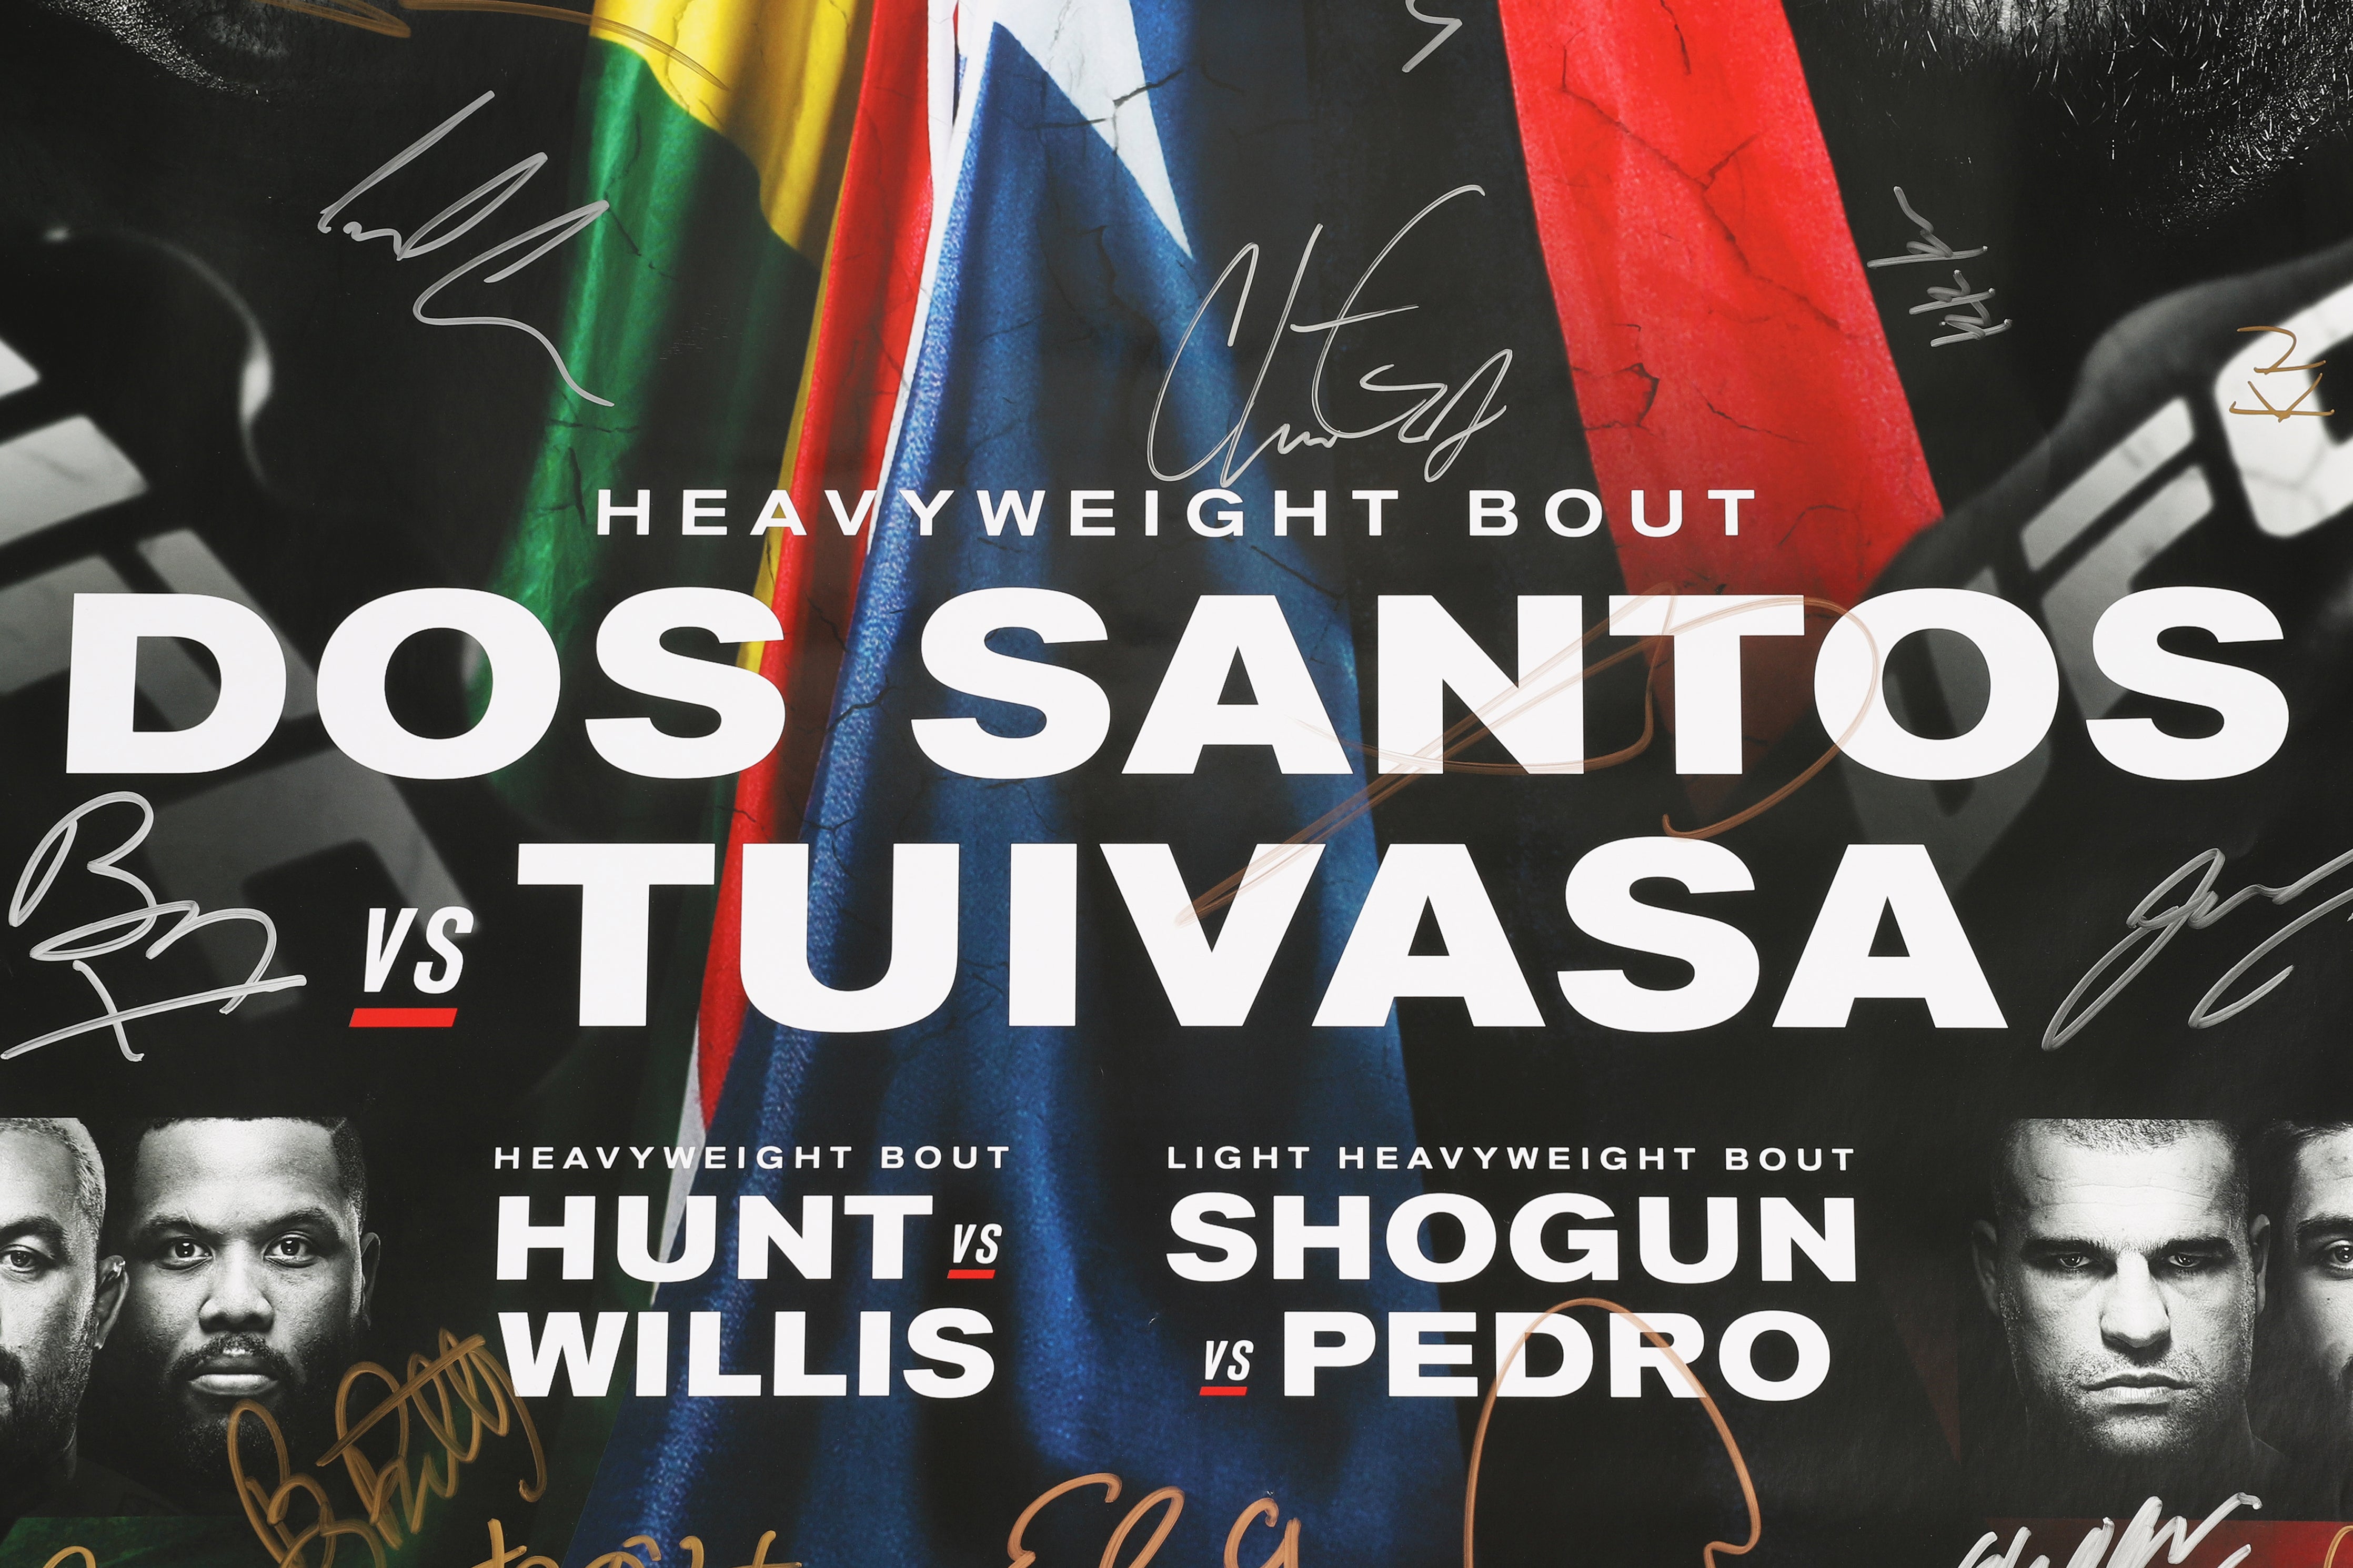 UFC Fight Night: Dos Santos vs Tuivasa Autographed Event Poster